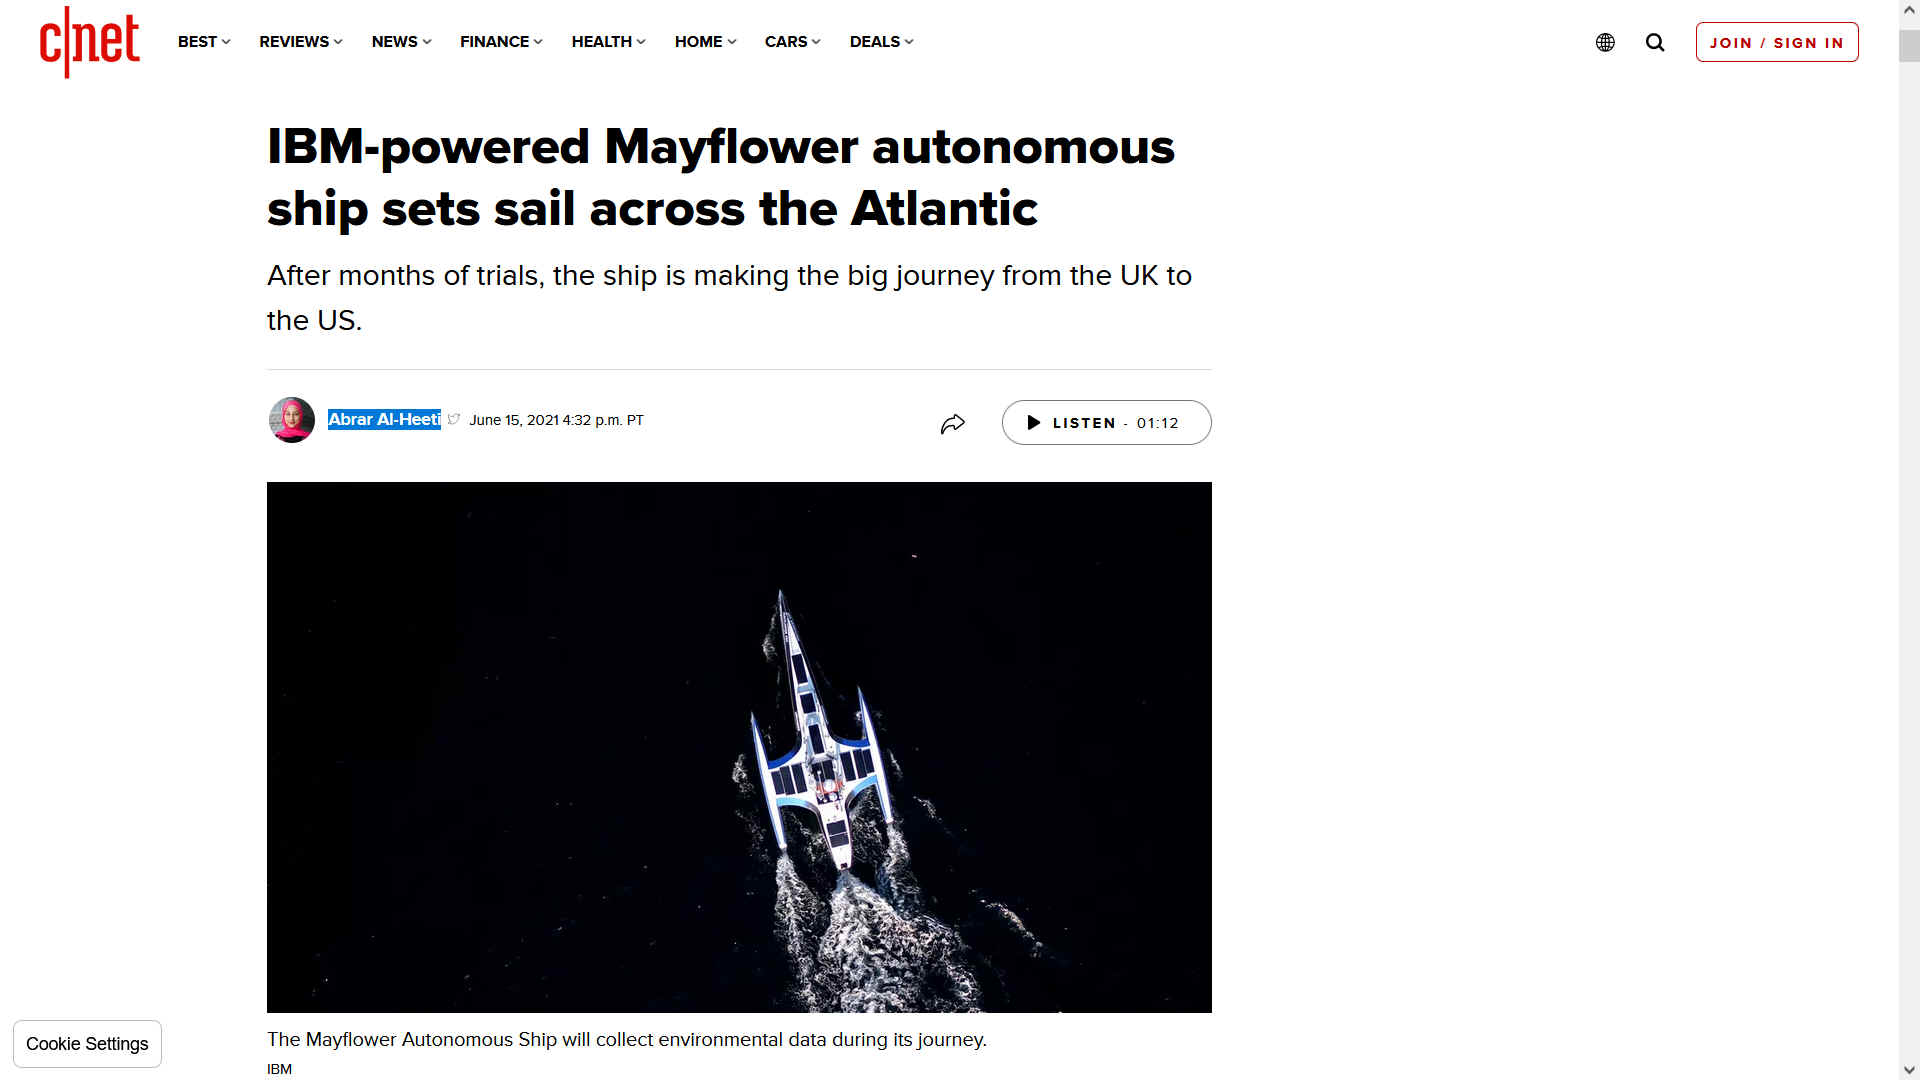 IBM's Mayflower autonomous ship sets sail across the Atlantic